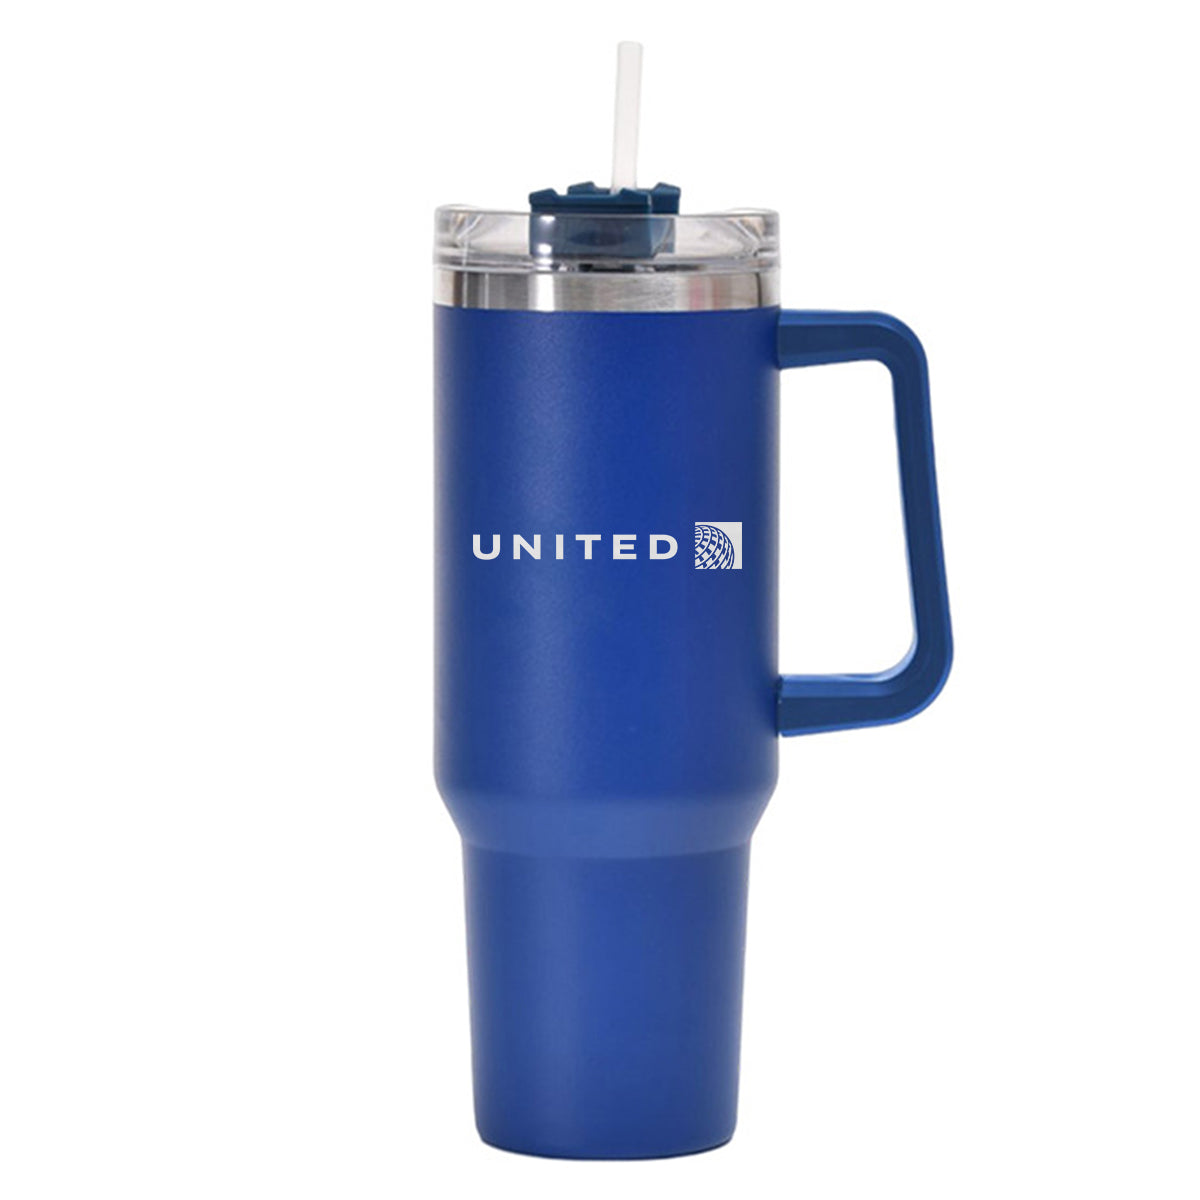 United Airlines Designed 40oz Stainless Steel Car Mug With Holder